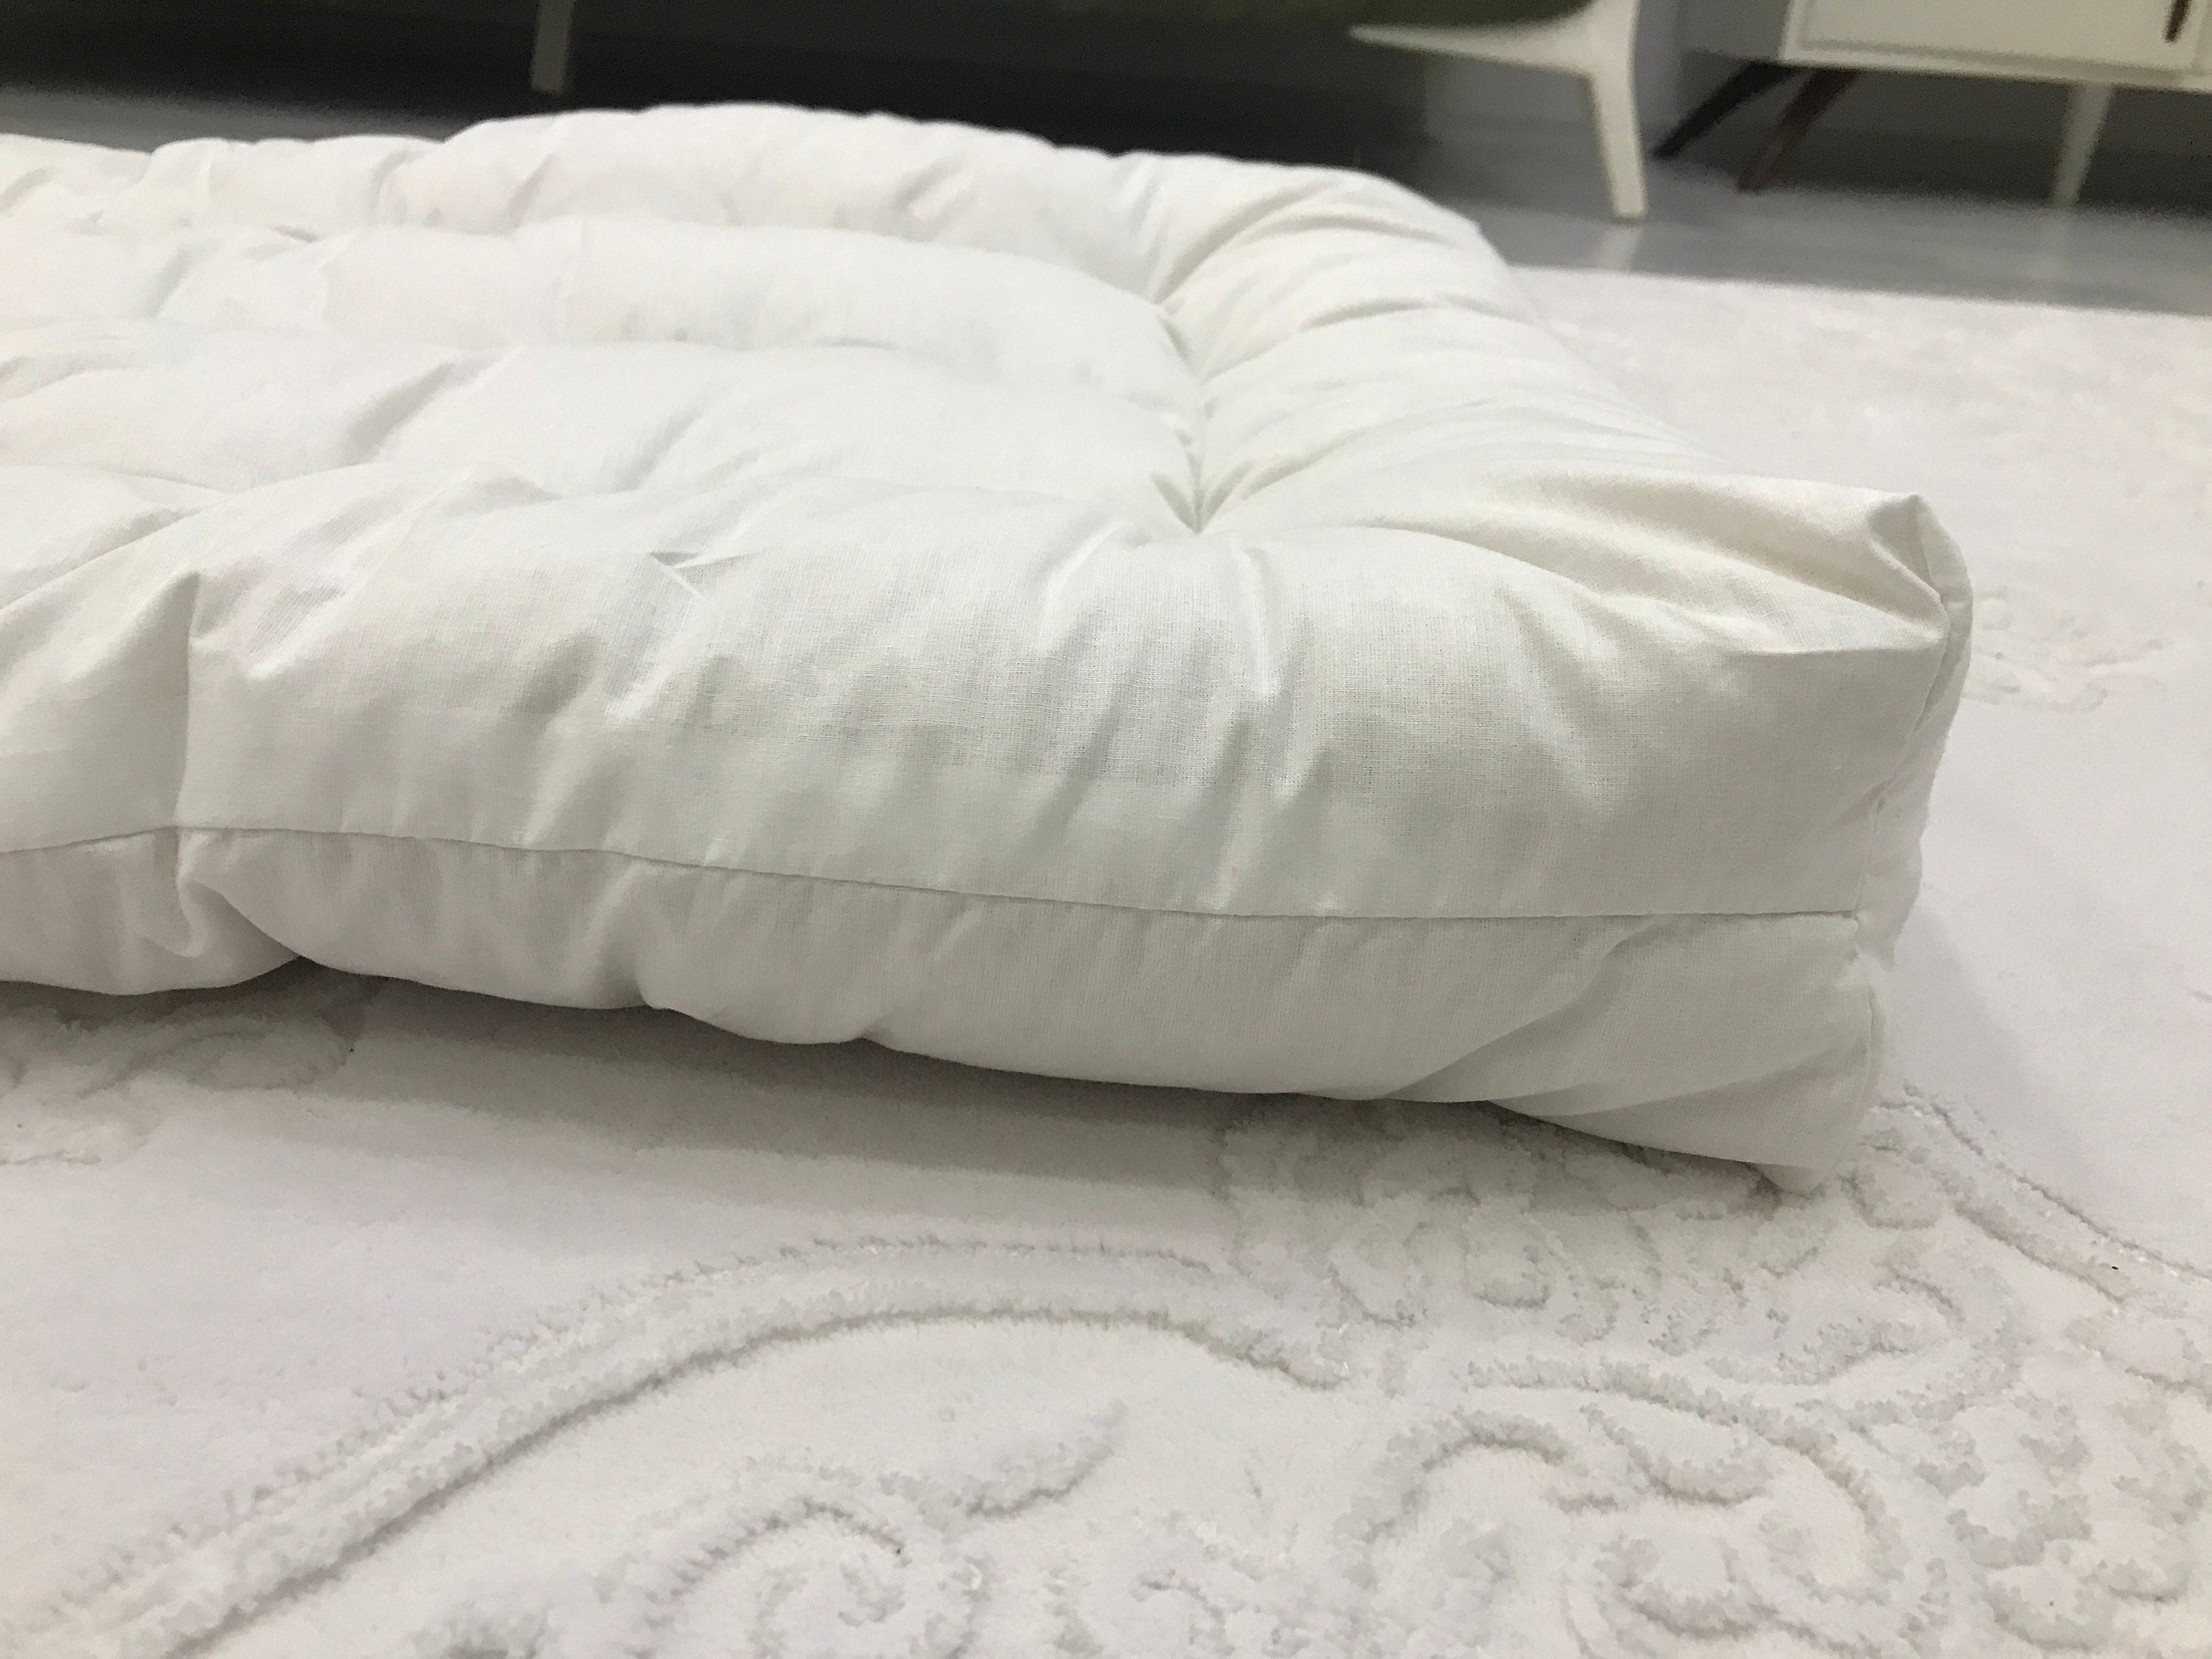 Bedecor floor futon mattress cover,Zipper Soft Skin-FriendlyJapanese F